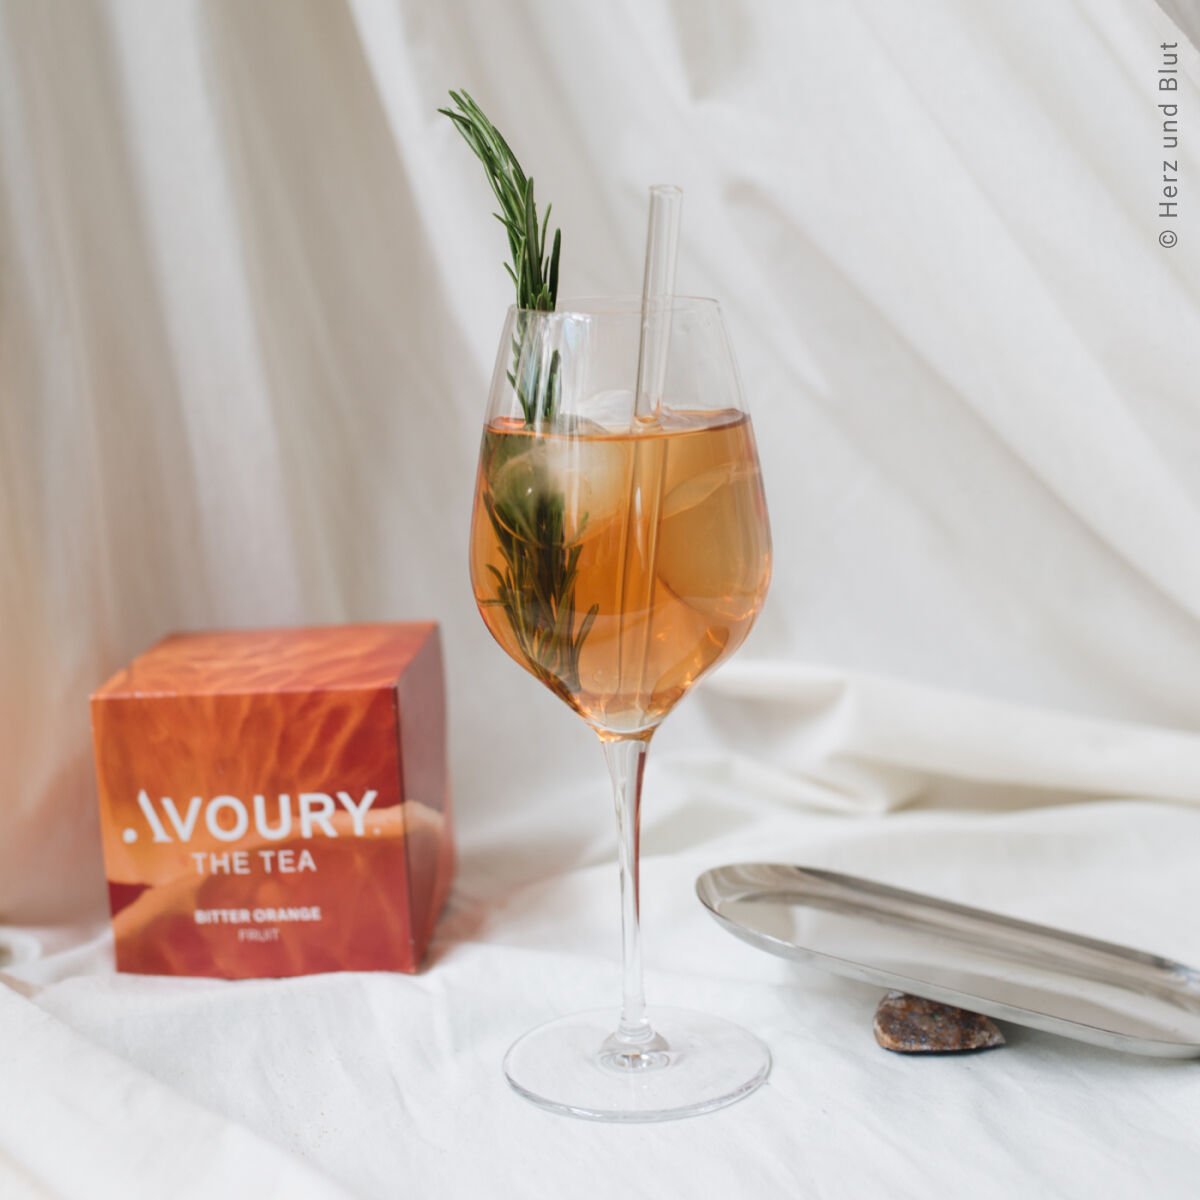 Tea Cocktail with Avoury Bitter Orange tea